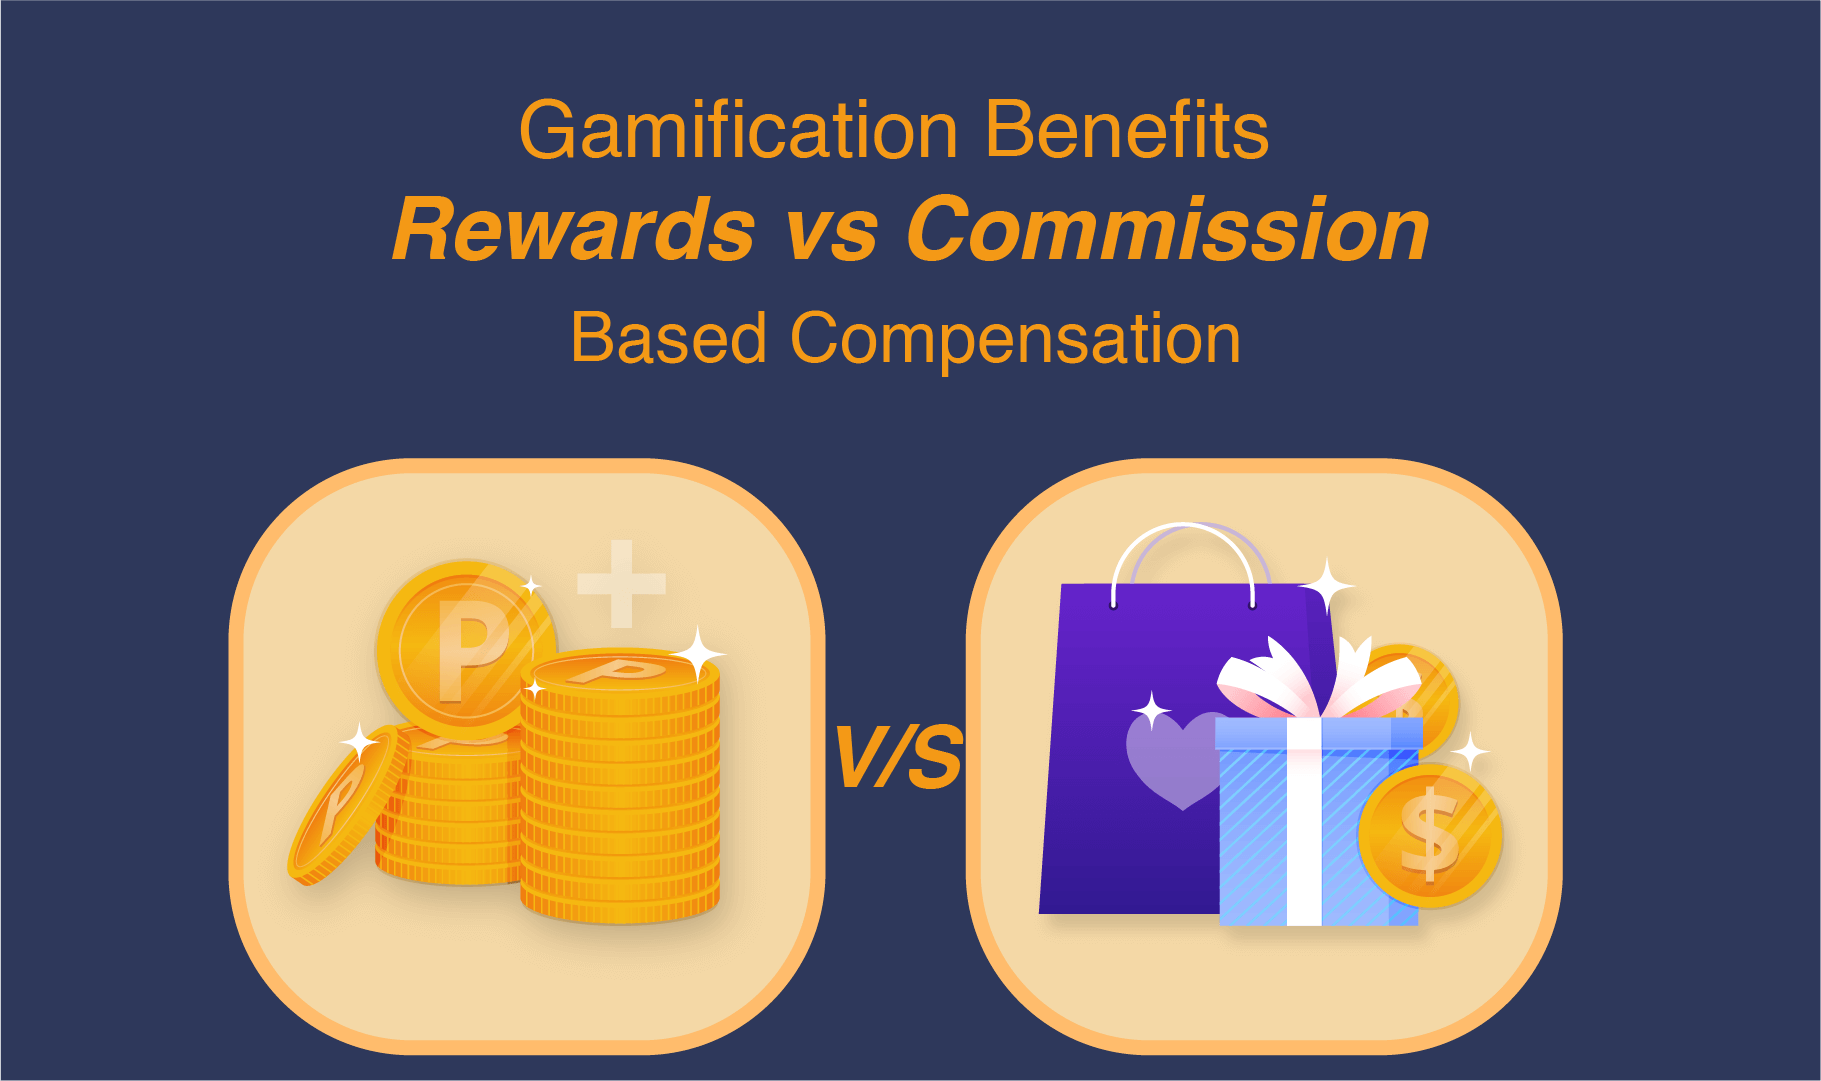 Gamification Benefits: Rewards vs Commission